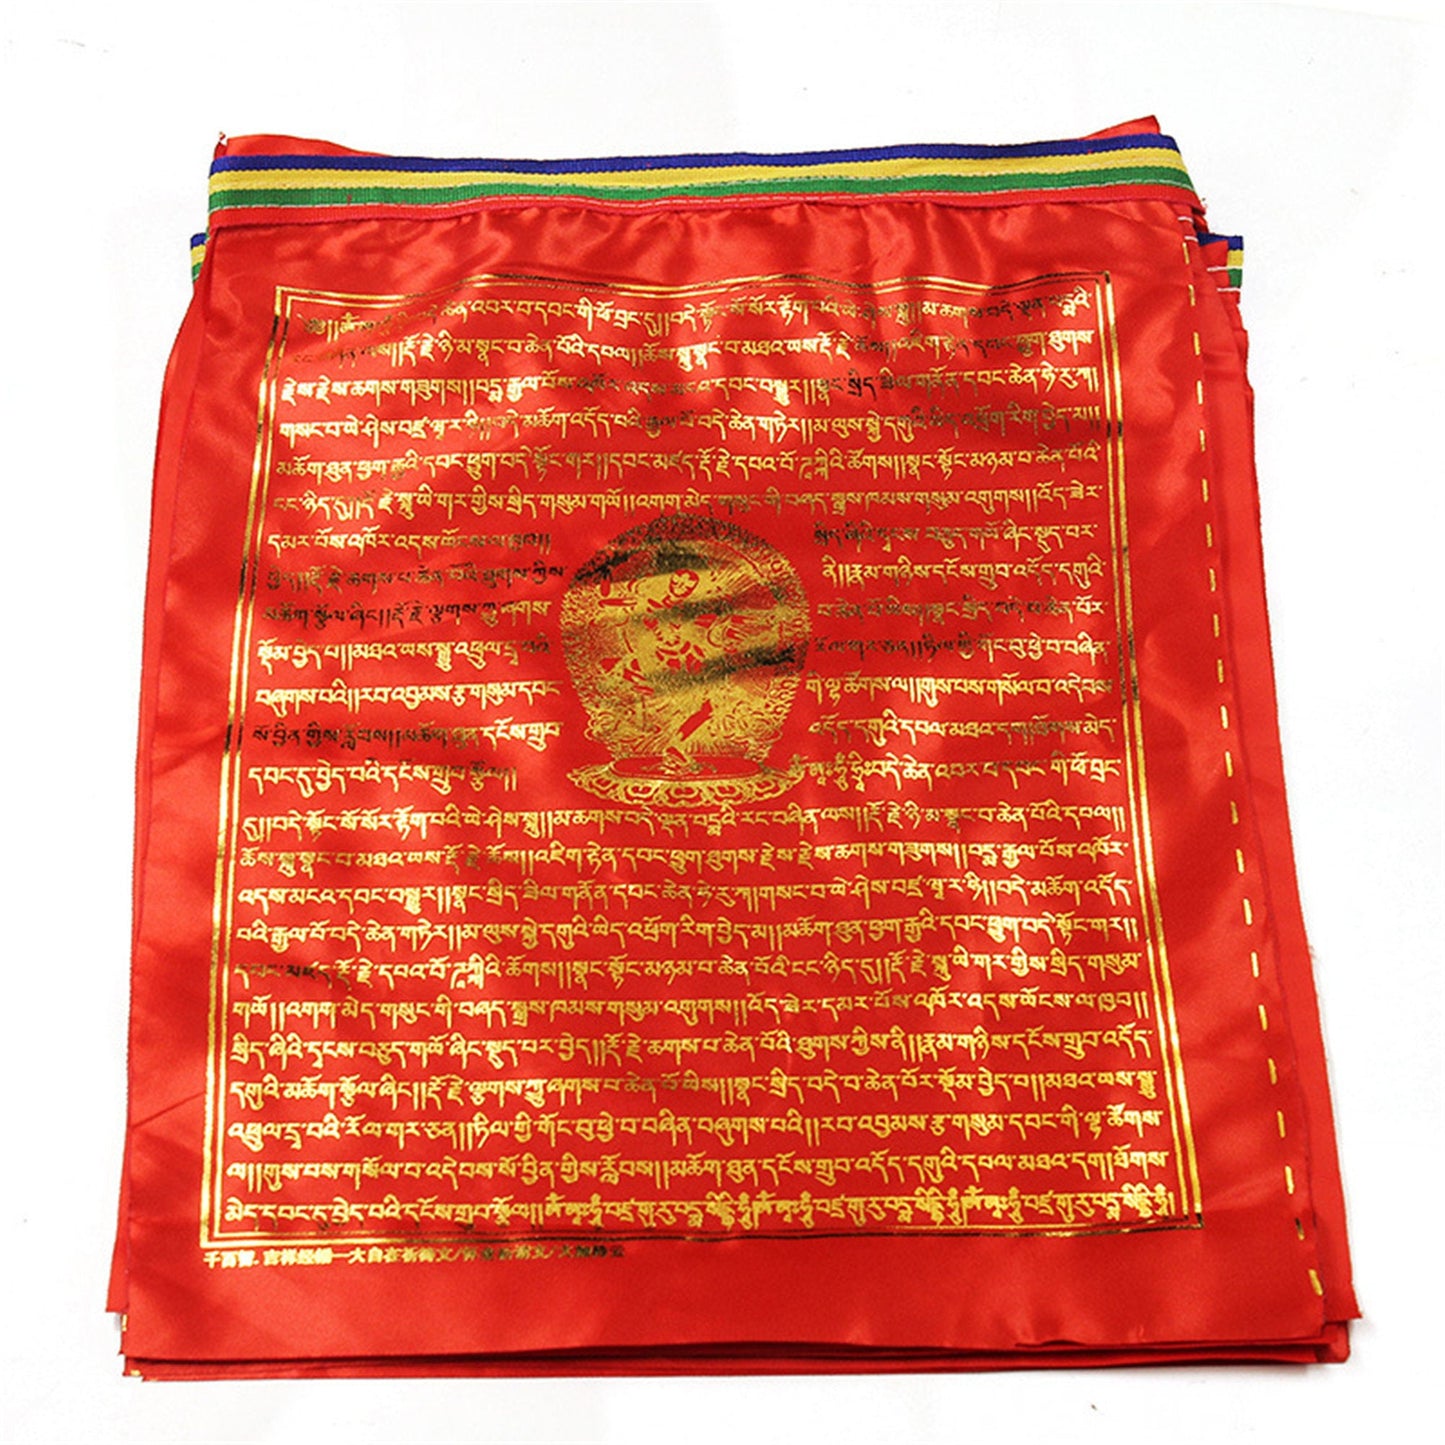 The Greatly Merciful Bodhisattva Mantra